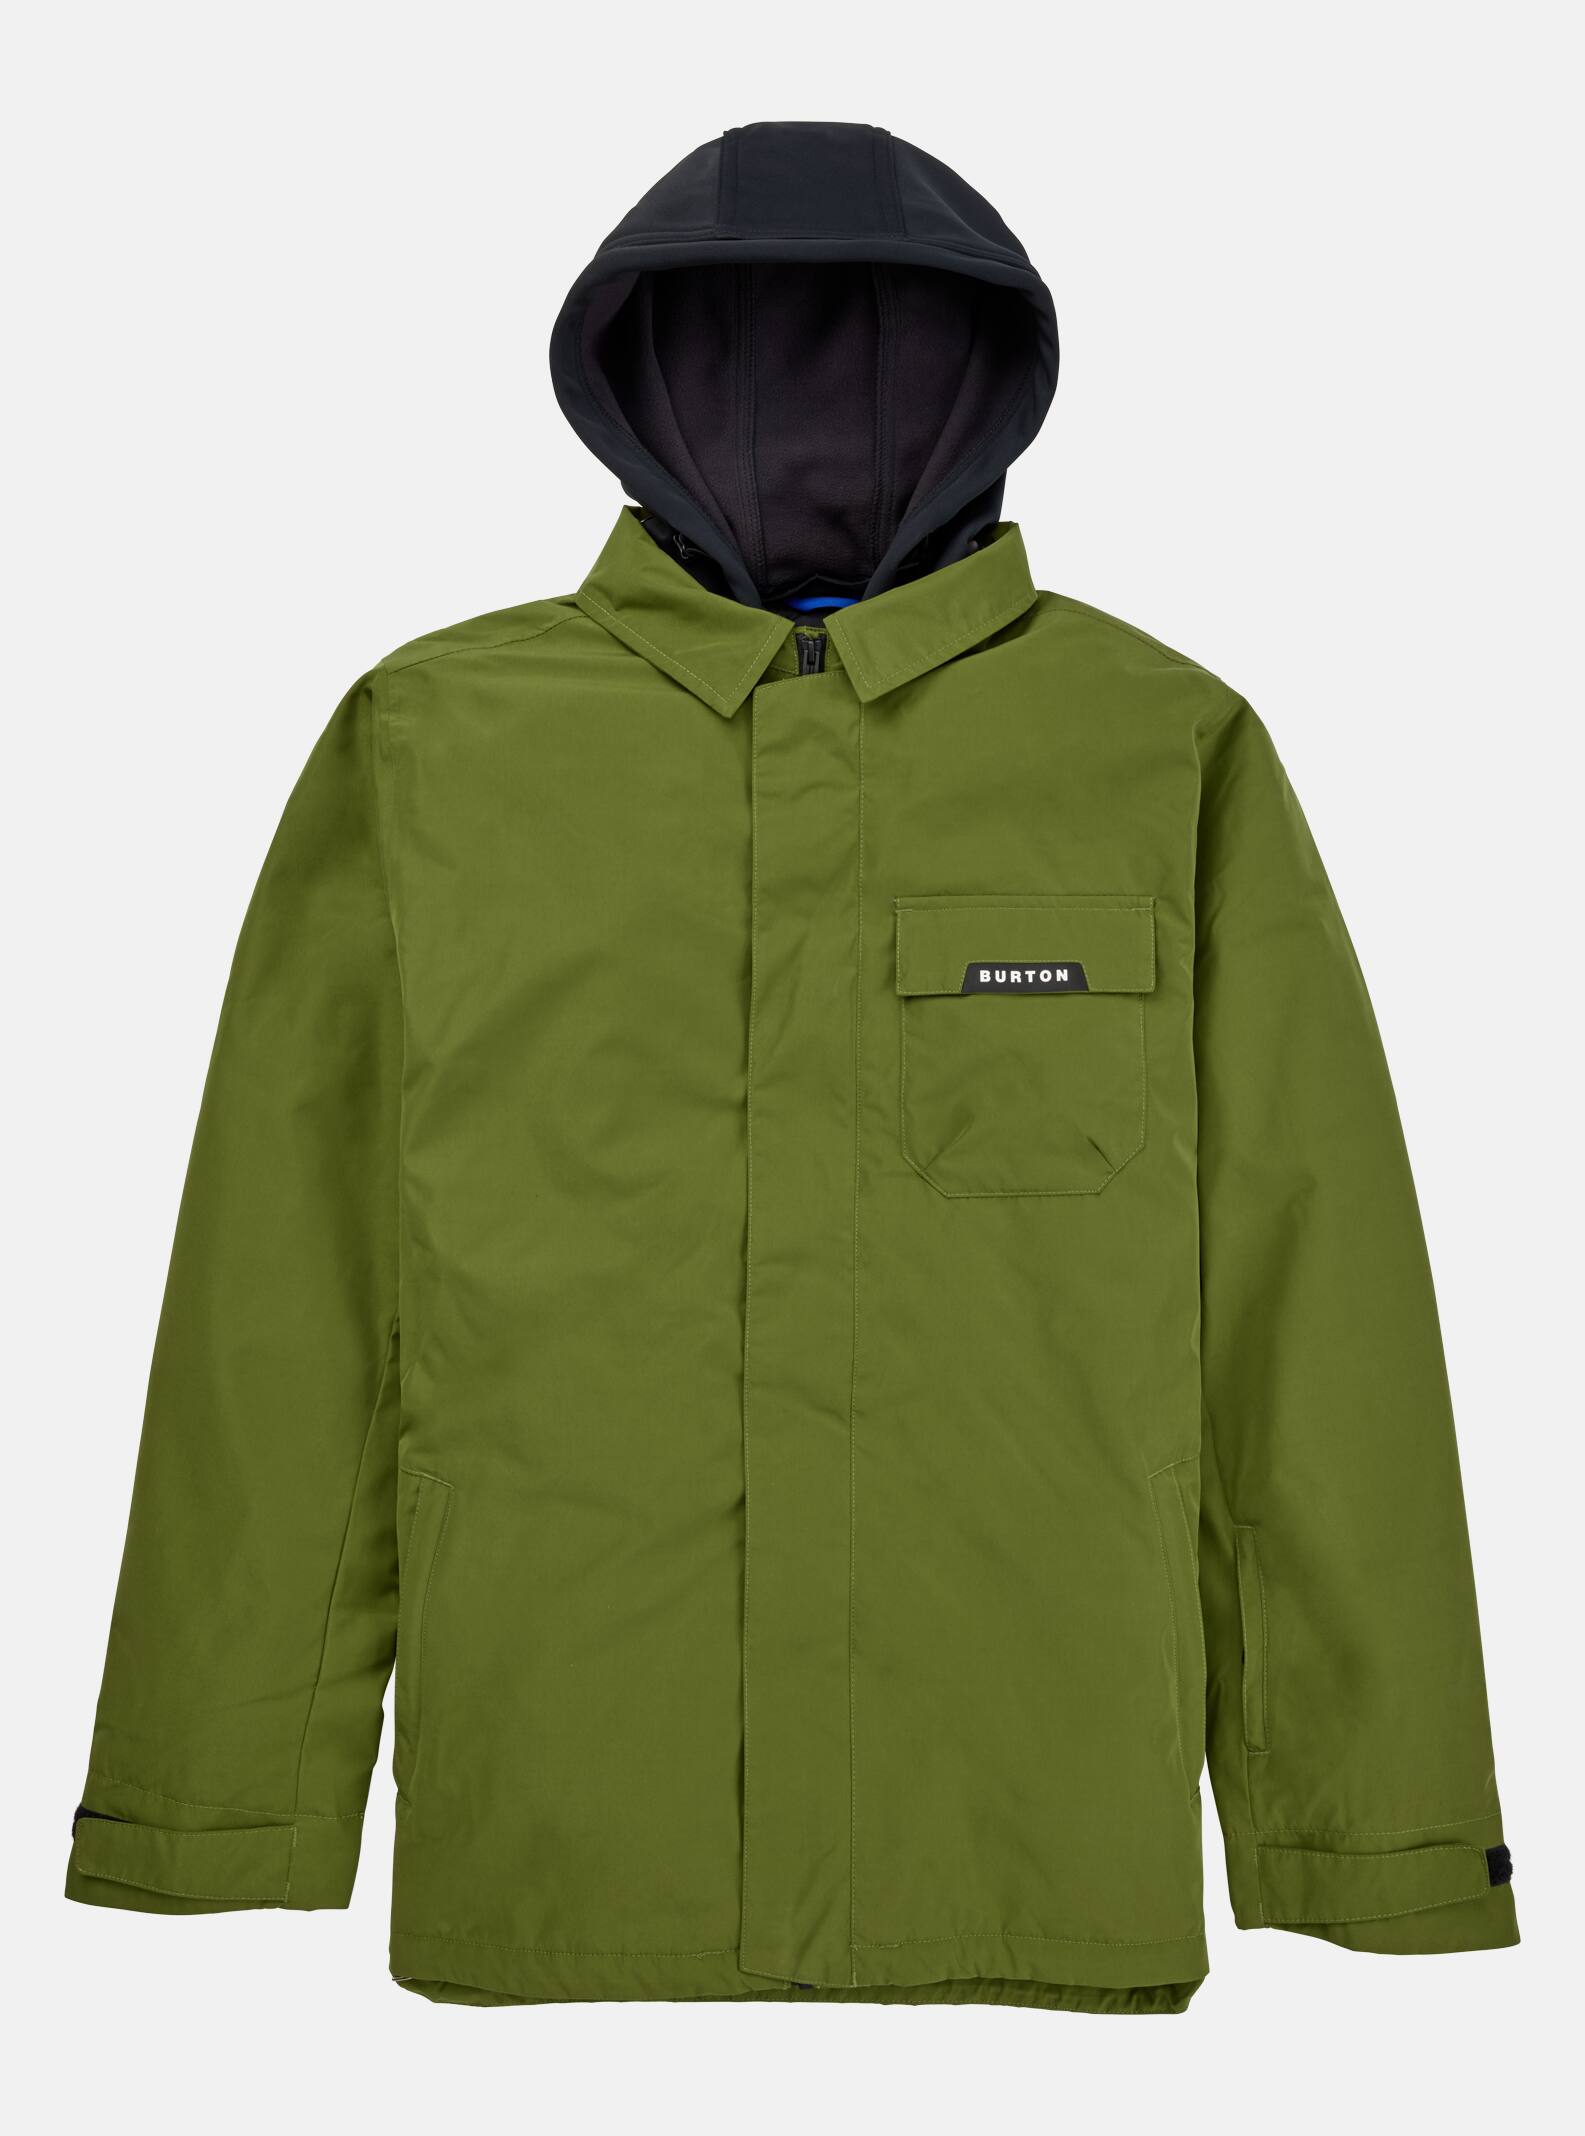 Mens Burton Insulated Vest Snowboard Jackets L Buy Online - Burton Outlet  Sale